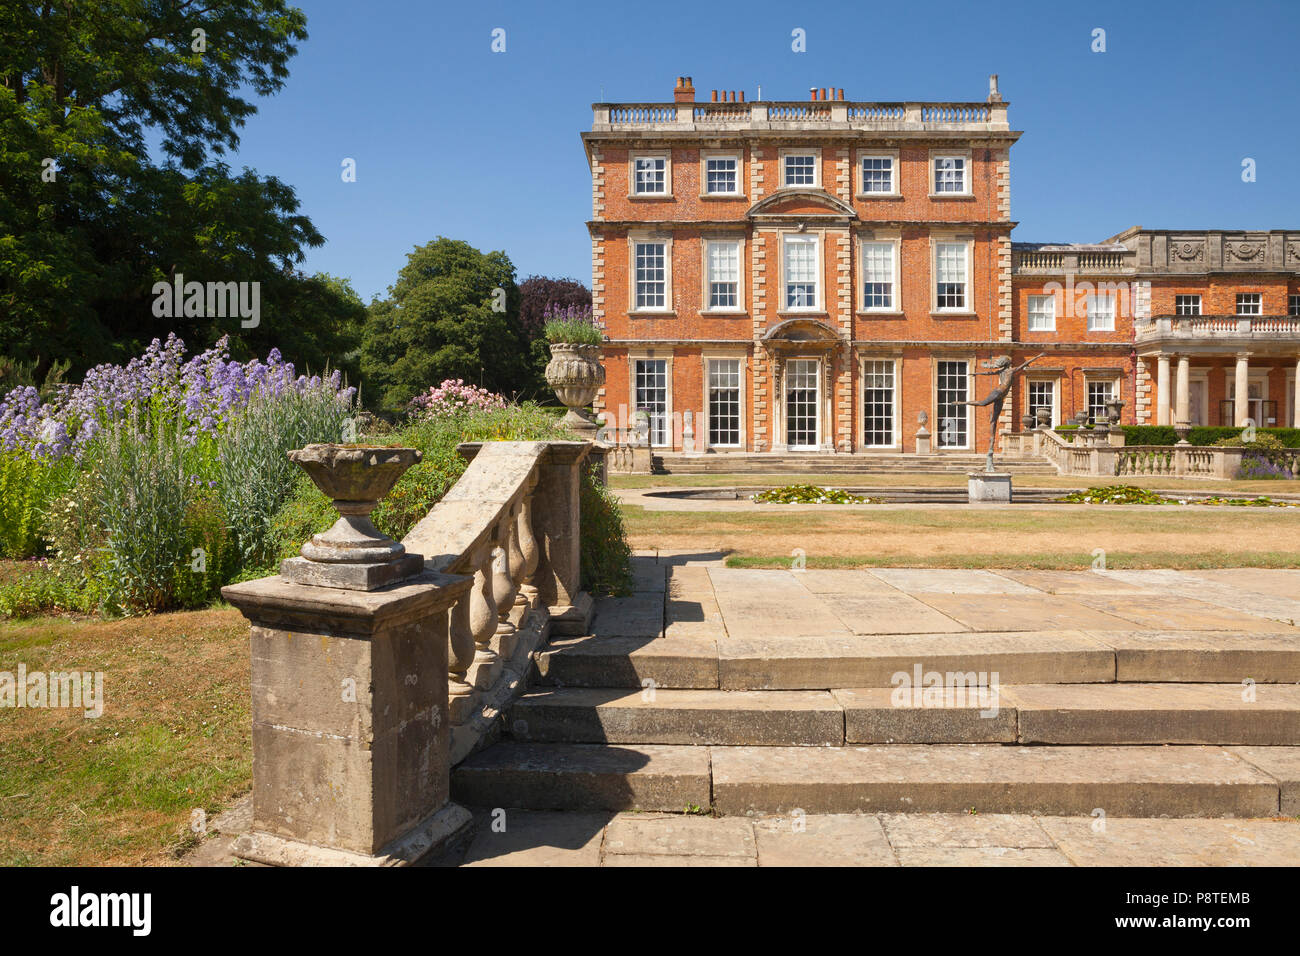 Newby Hall and Gardens, Ripon, North Yorkshire, UK. Summer, July 2018. Stock Photo